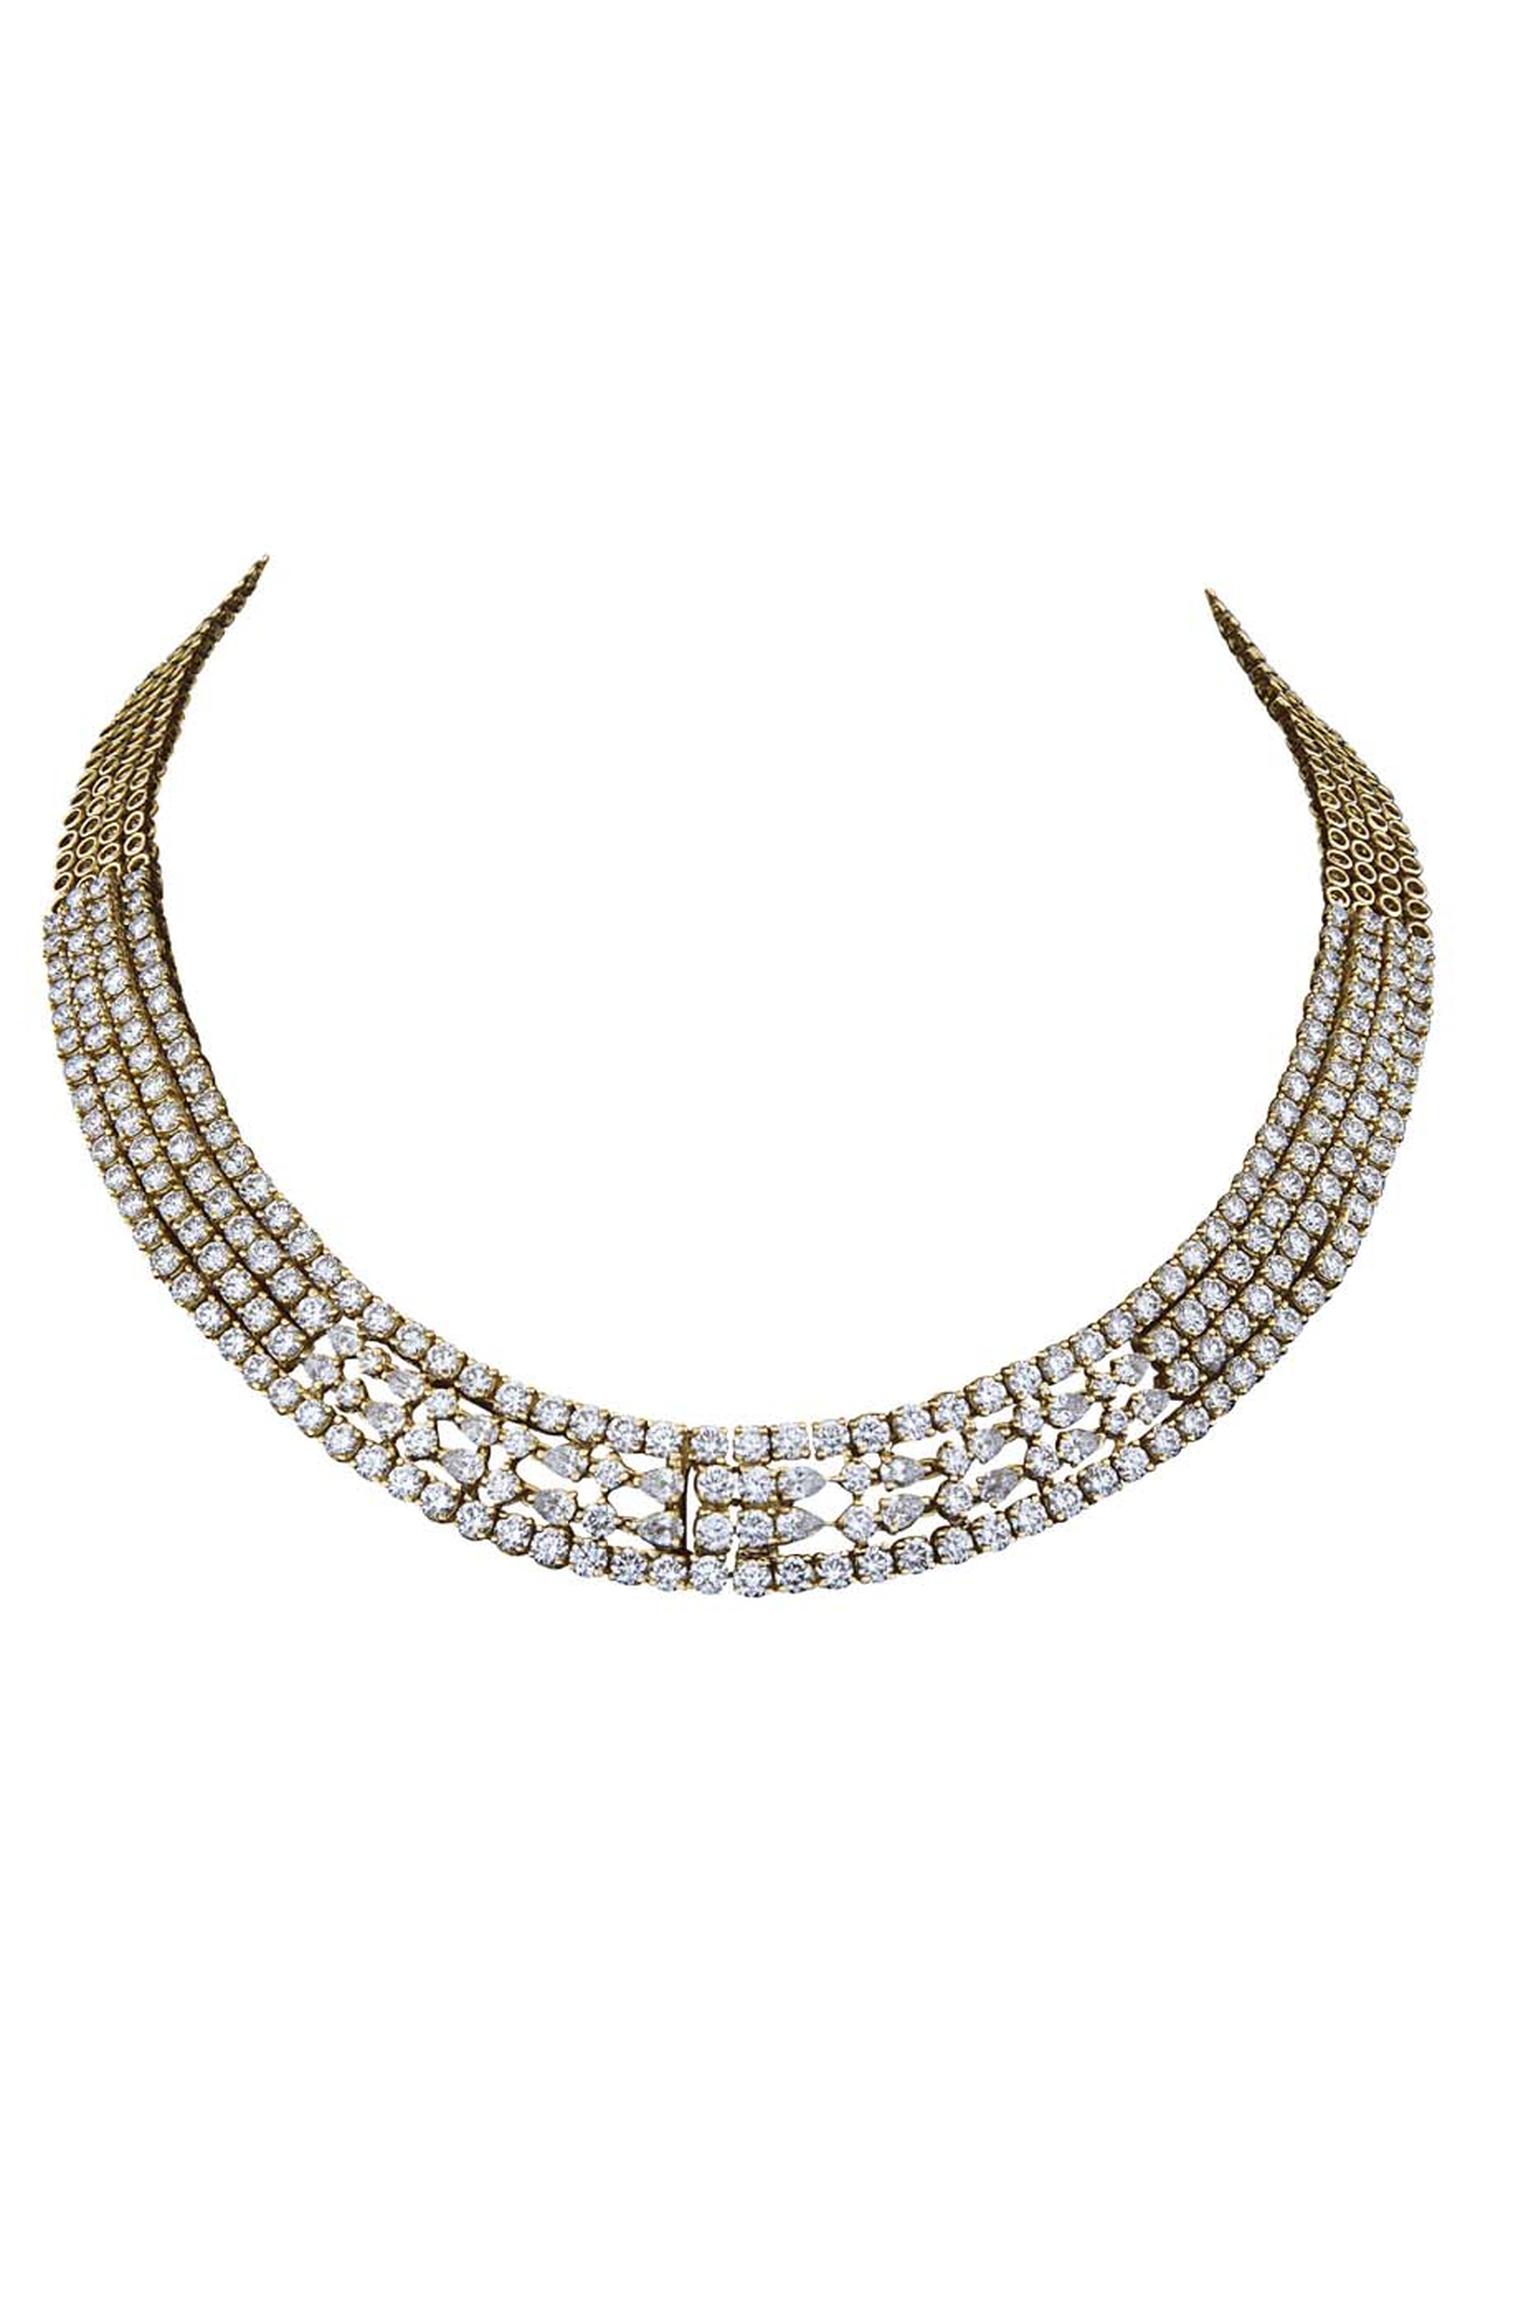 Varuna D Jani Vow collection diamond necklace